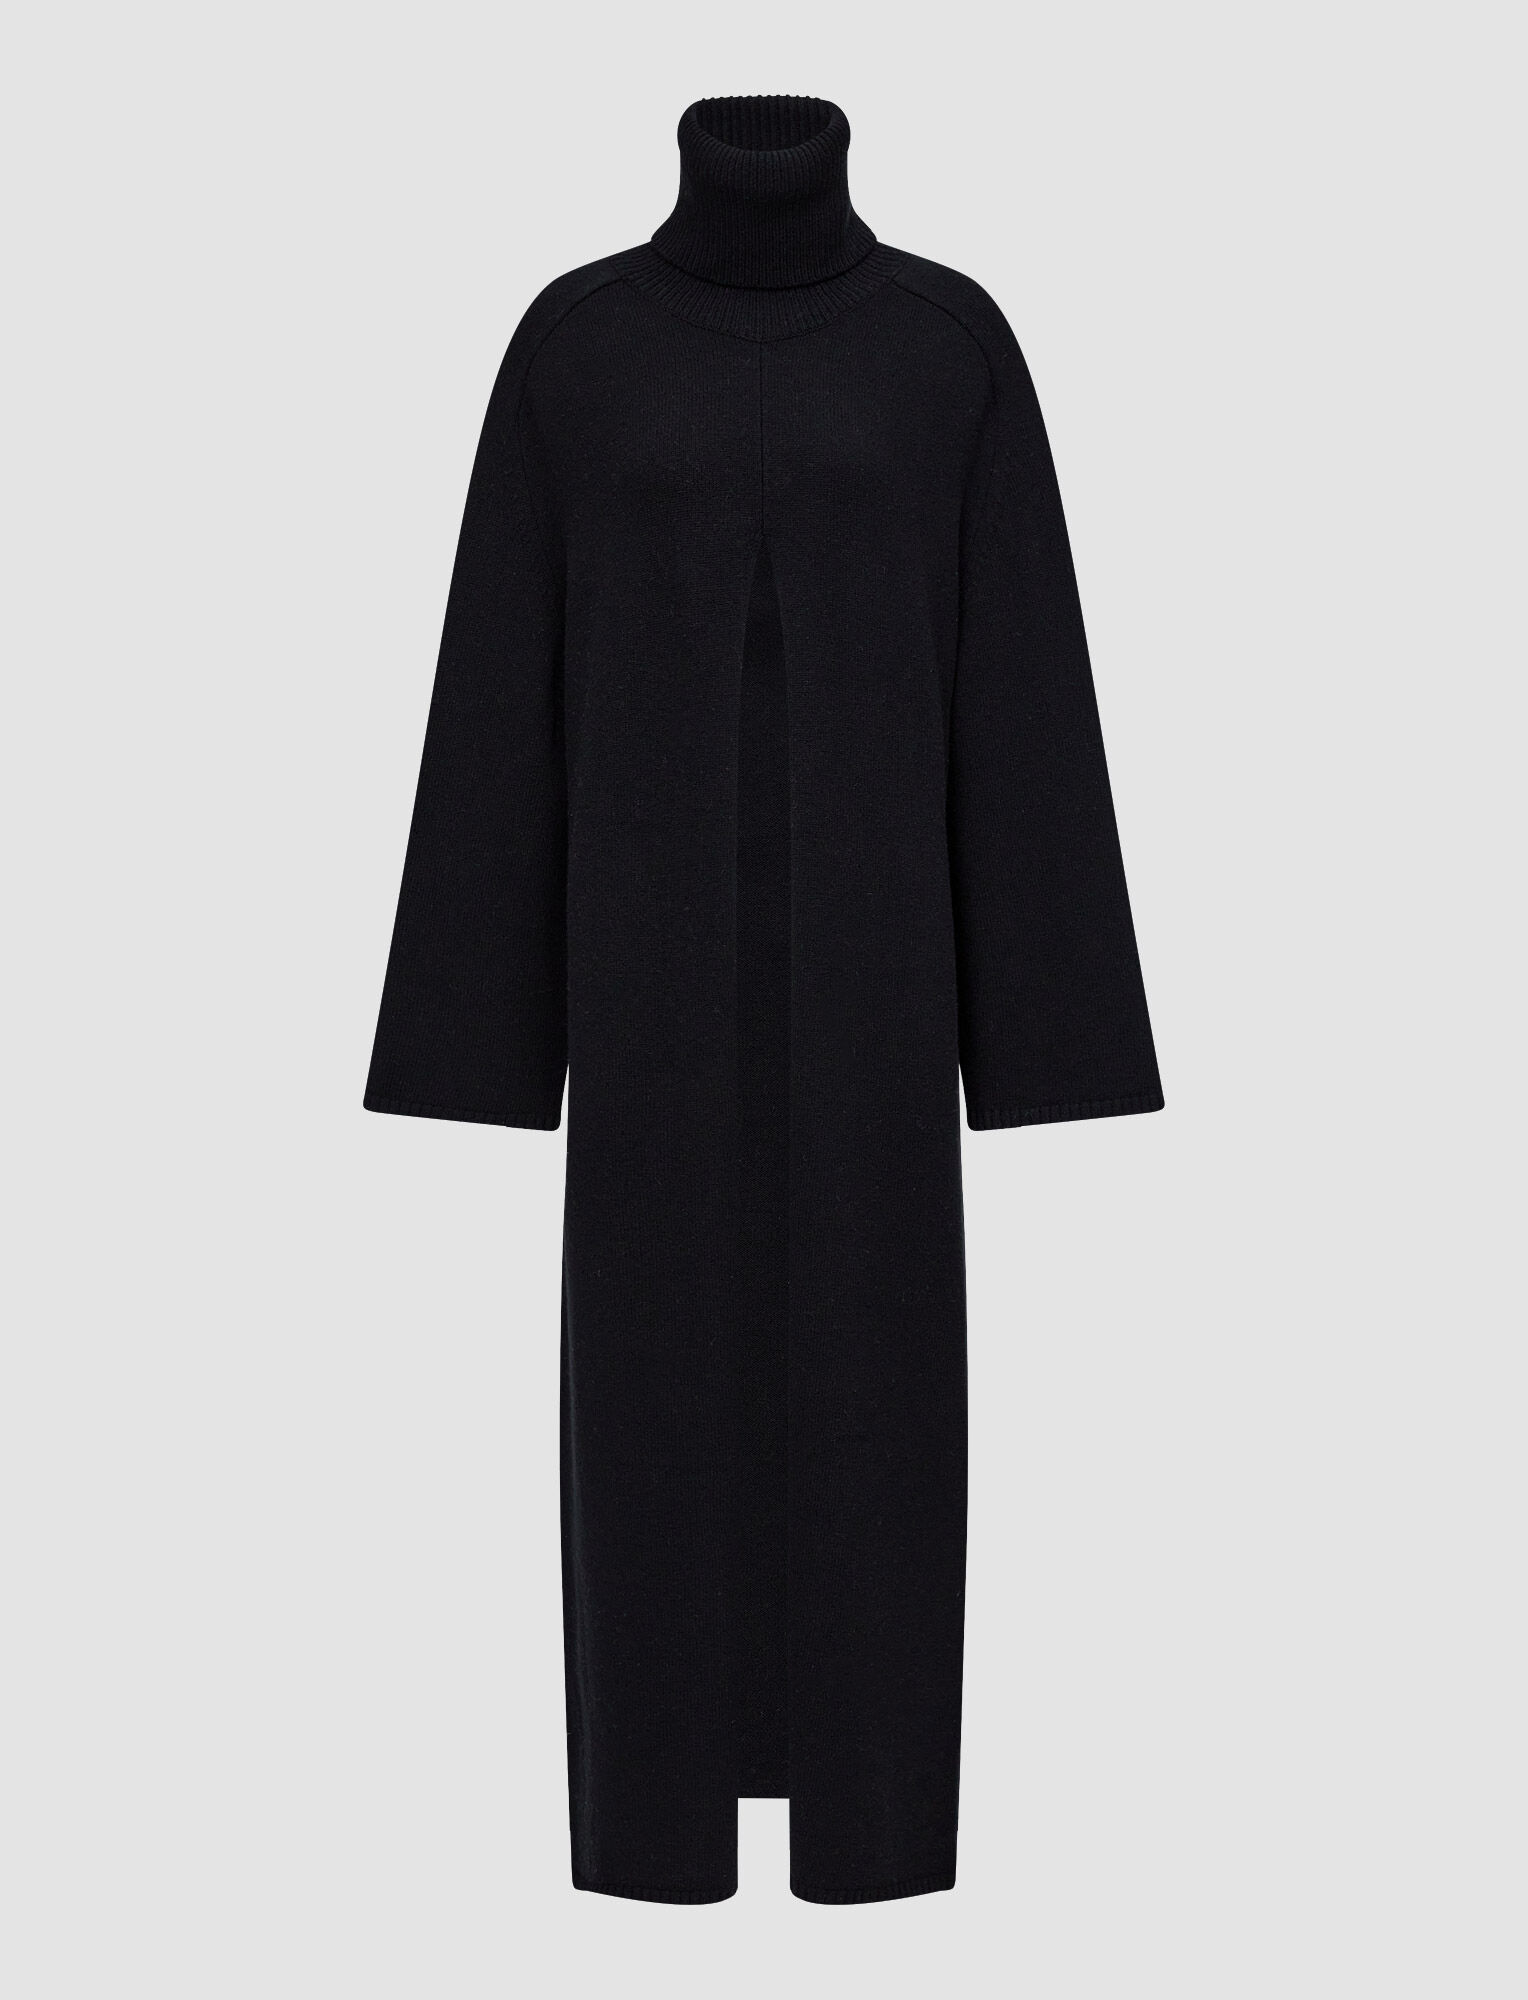 Joseph, Oversize Knit Viviane Dress, in Black